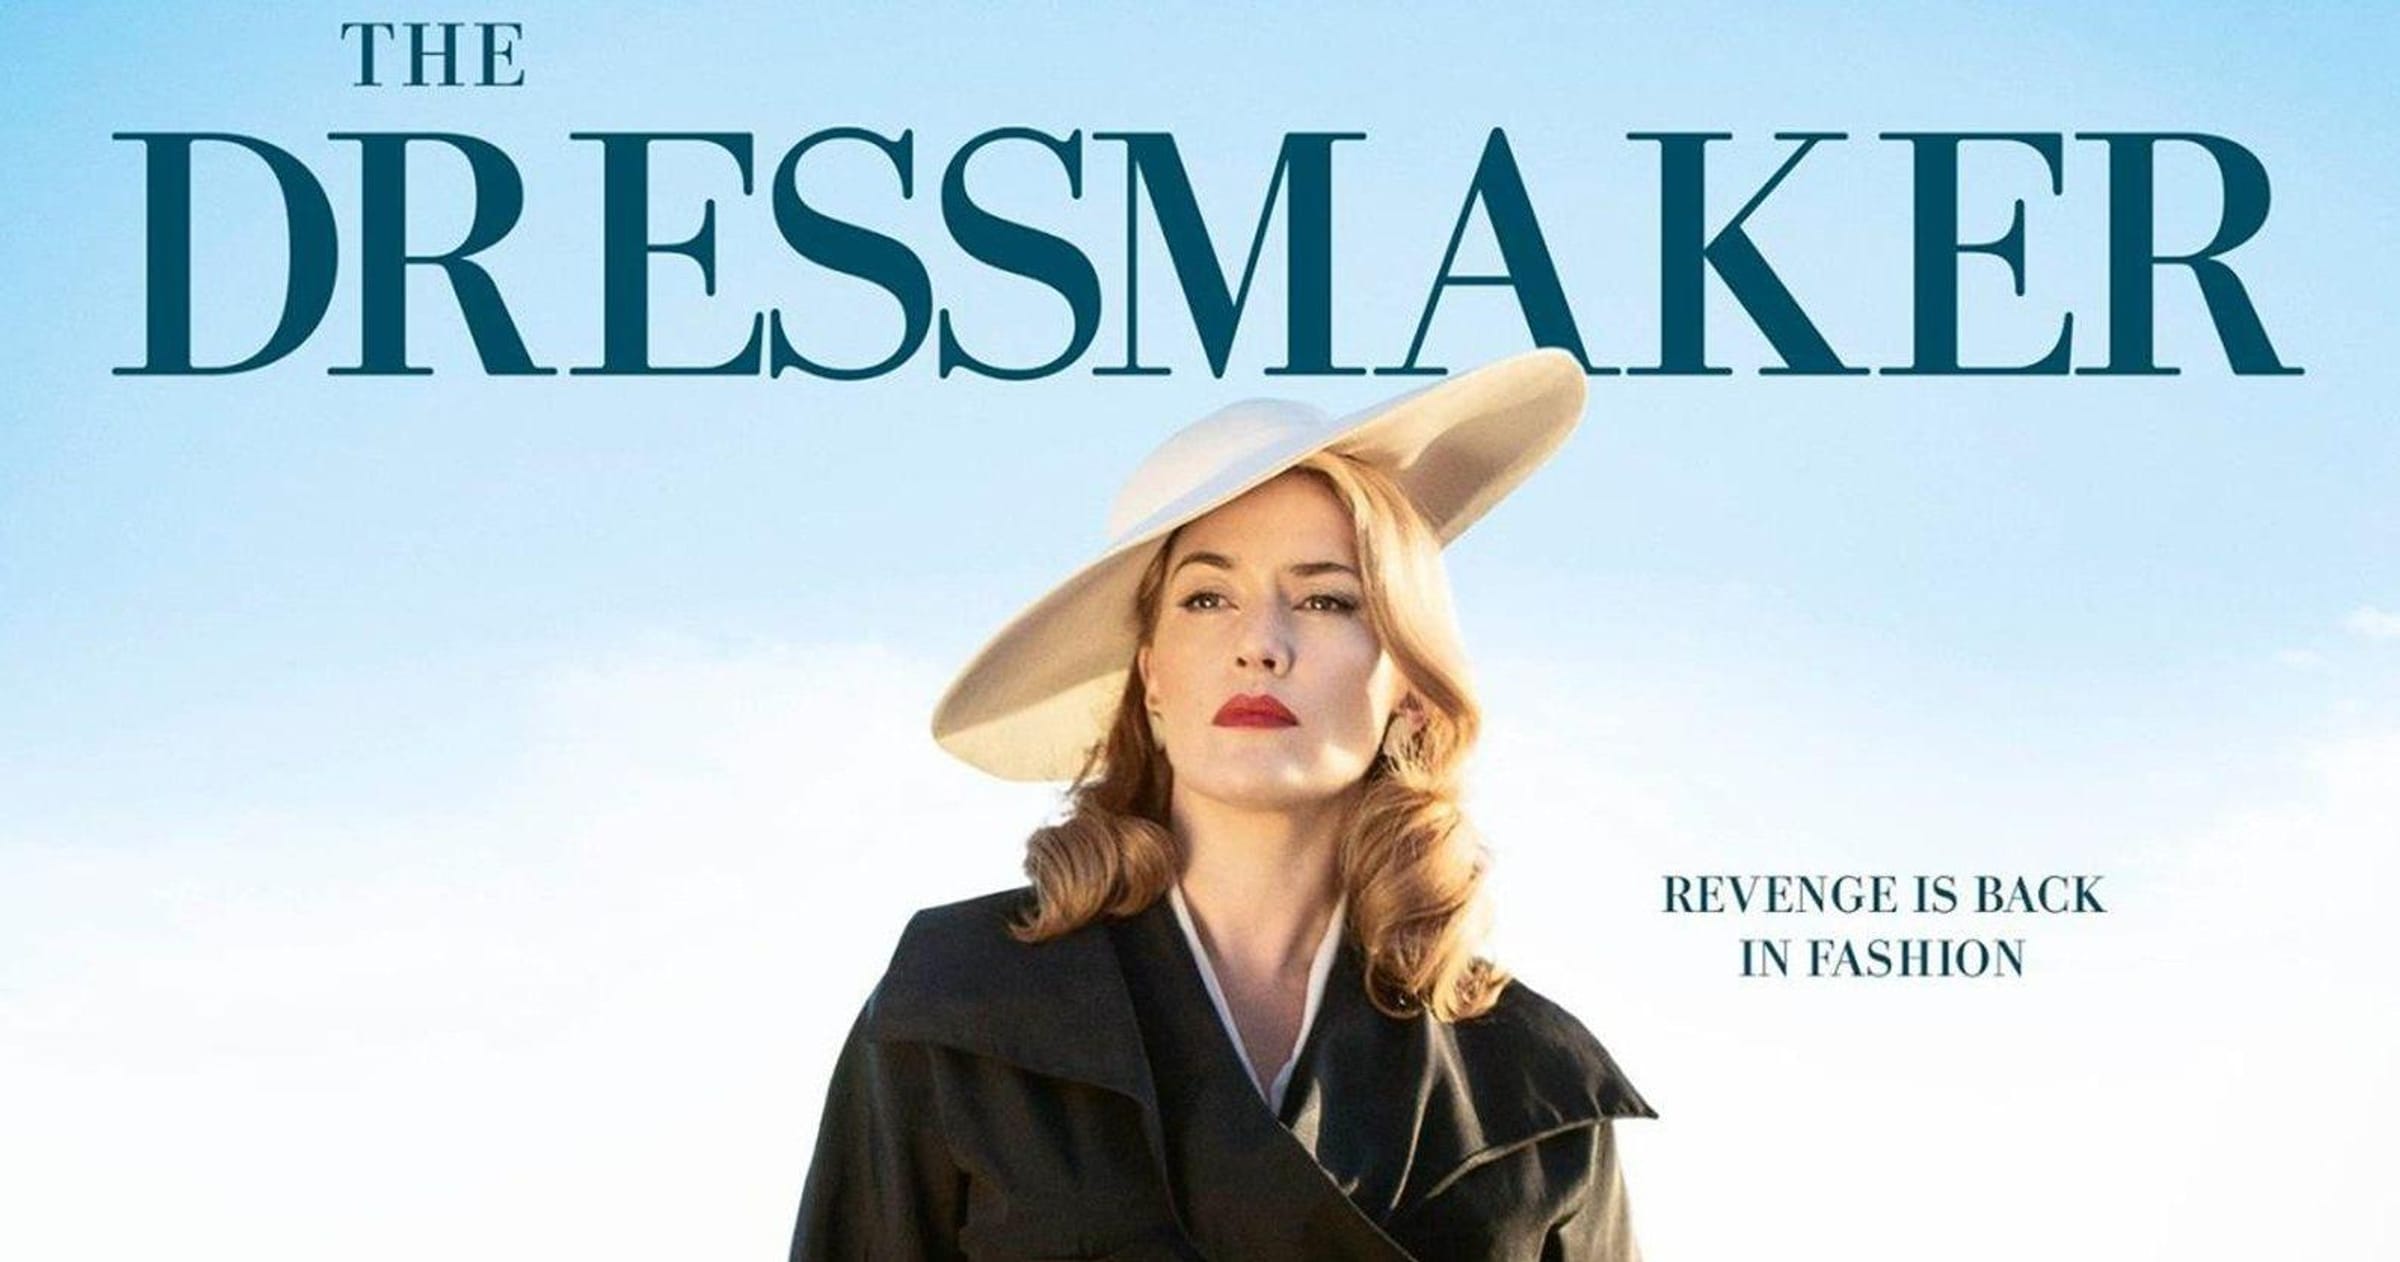 The Dressmaker review – revenge drama falls apart at the seams